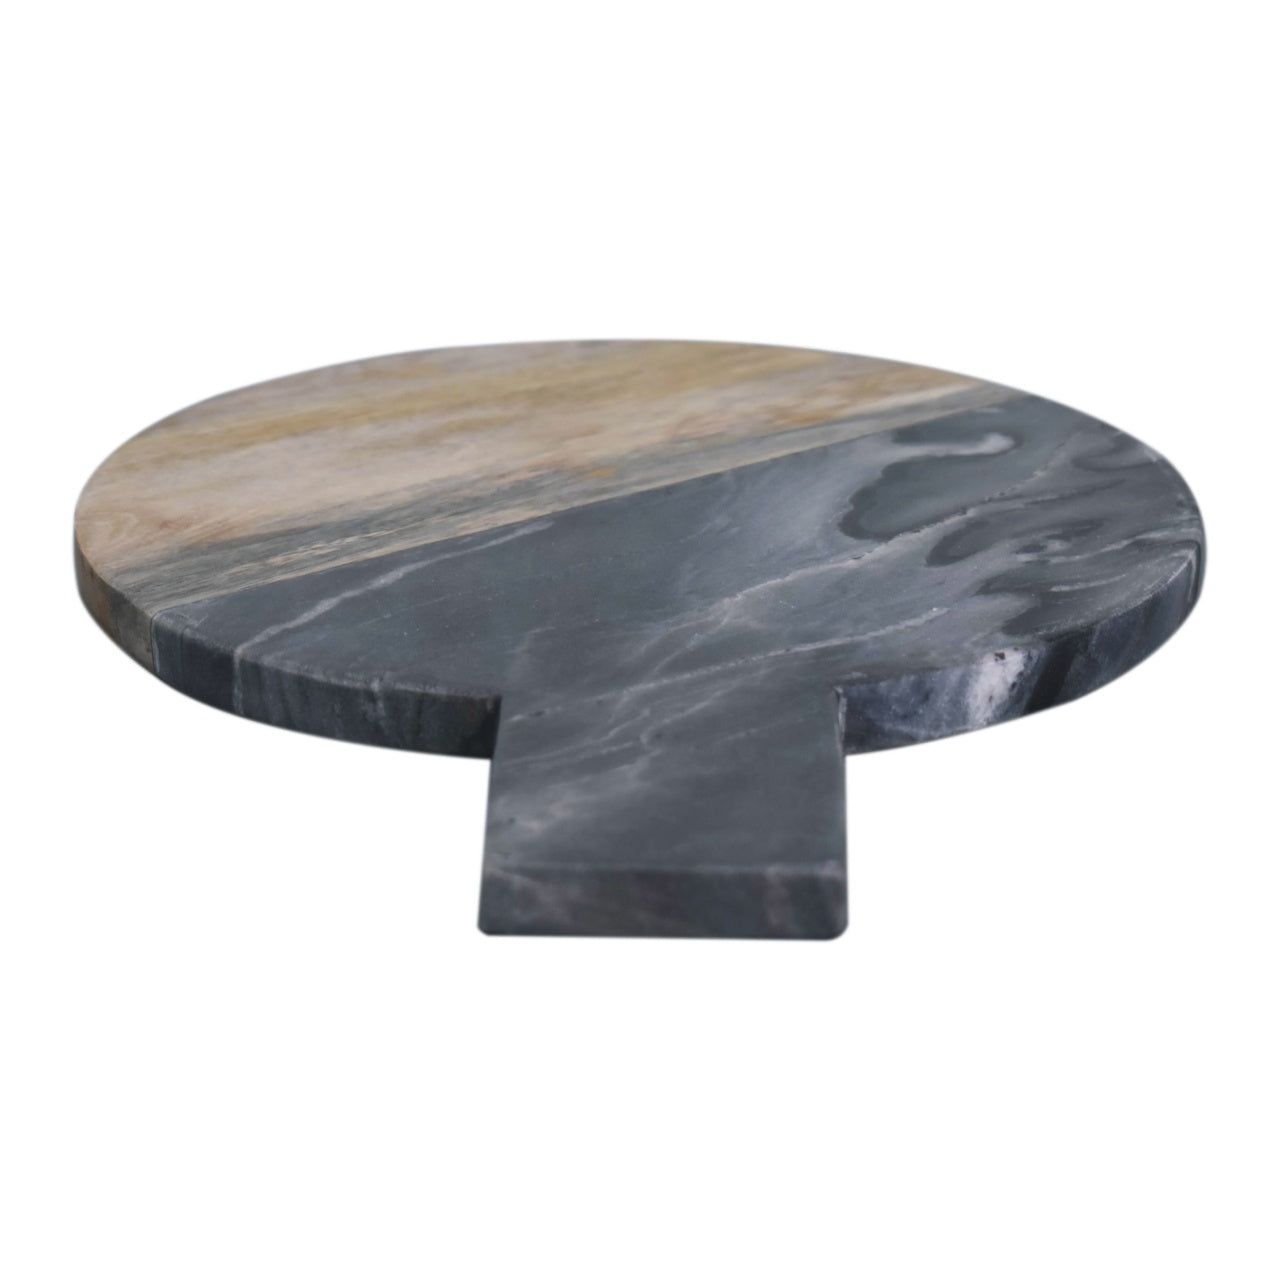 Black Marble, Terrazzo & Mango Wood Round Chopping Board